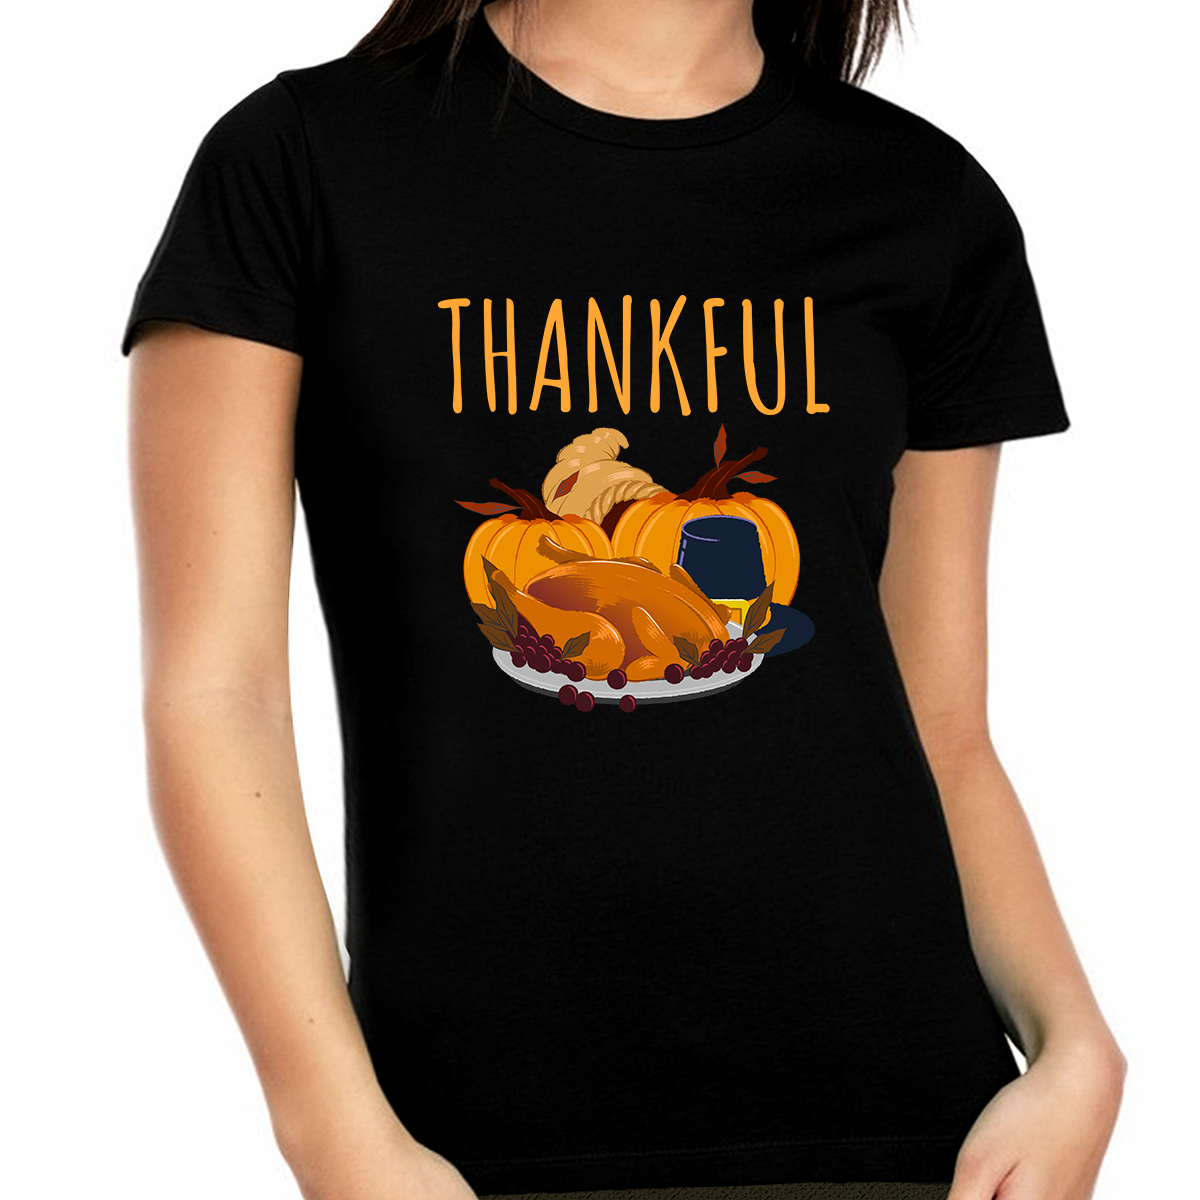 Womens Thanksgiving Shirt Pumpkin Shirt Womens Fall Tops Plus Size Thankful Shirts for Women 1X 2X 3X 4X 5X